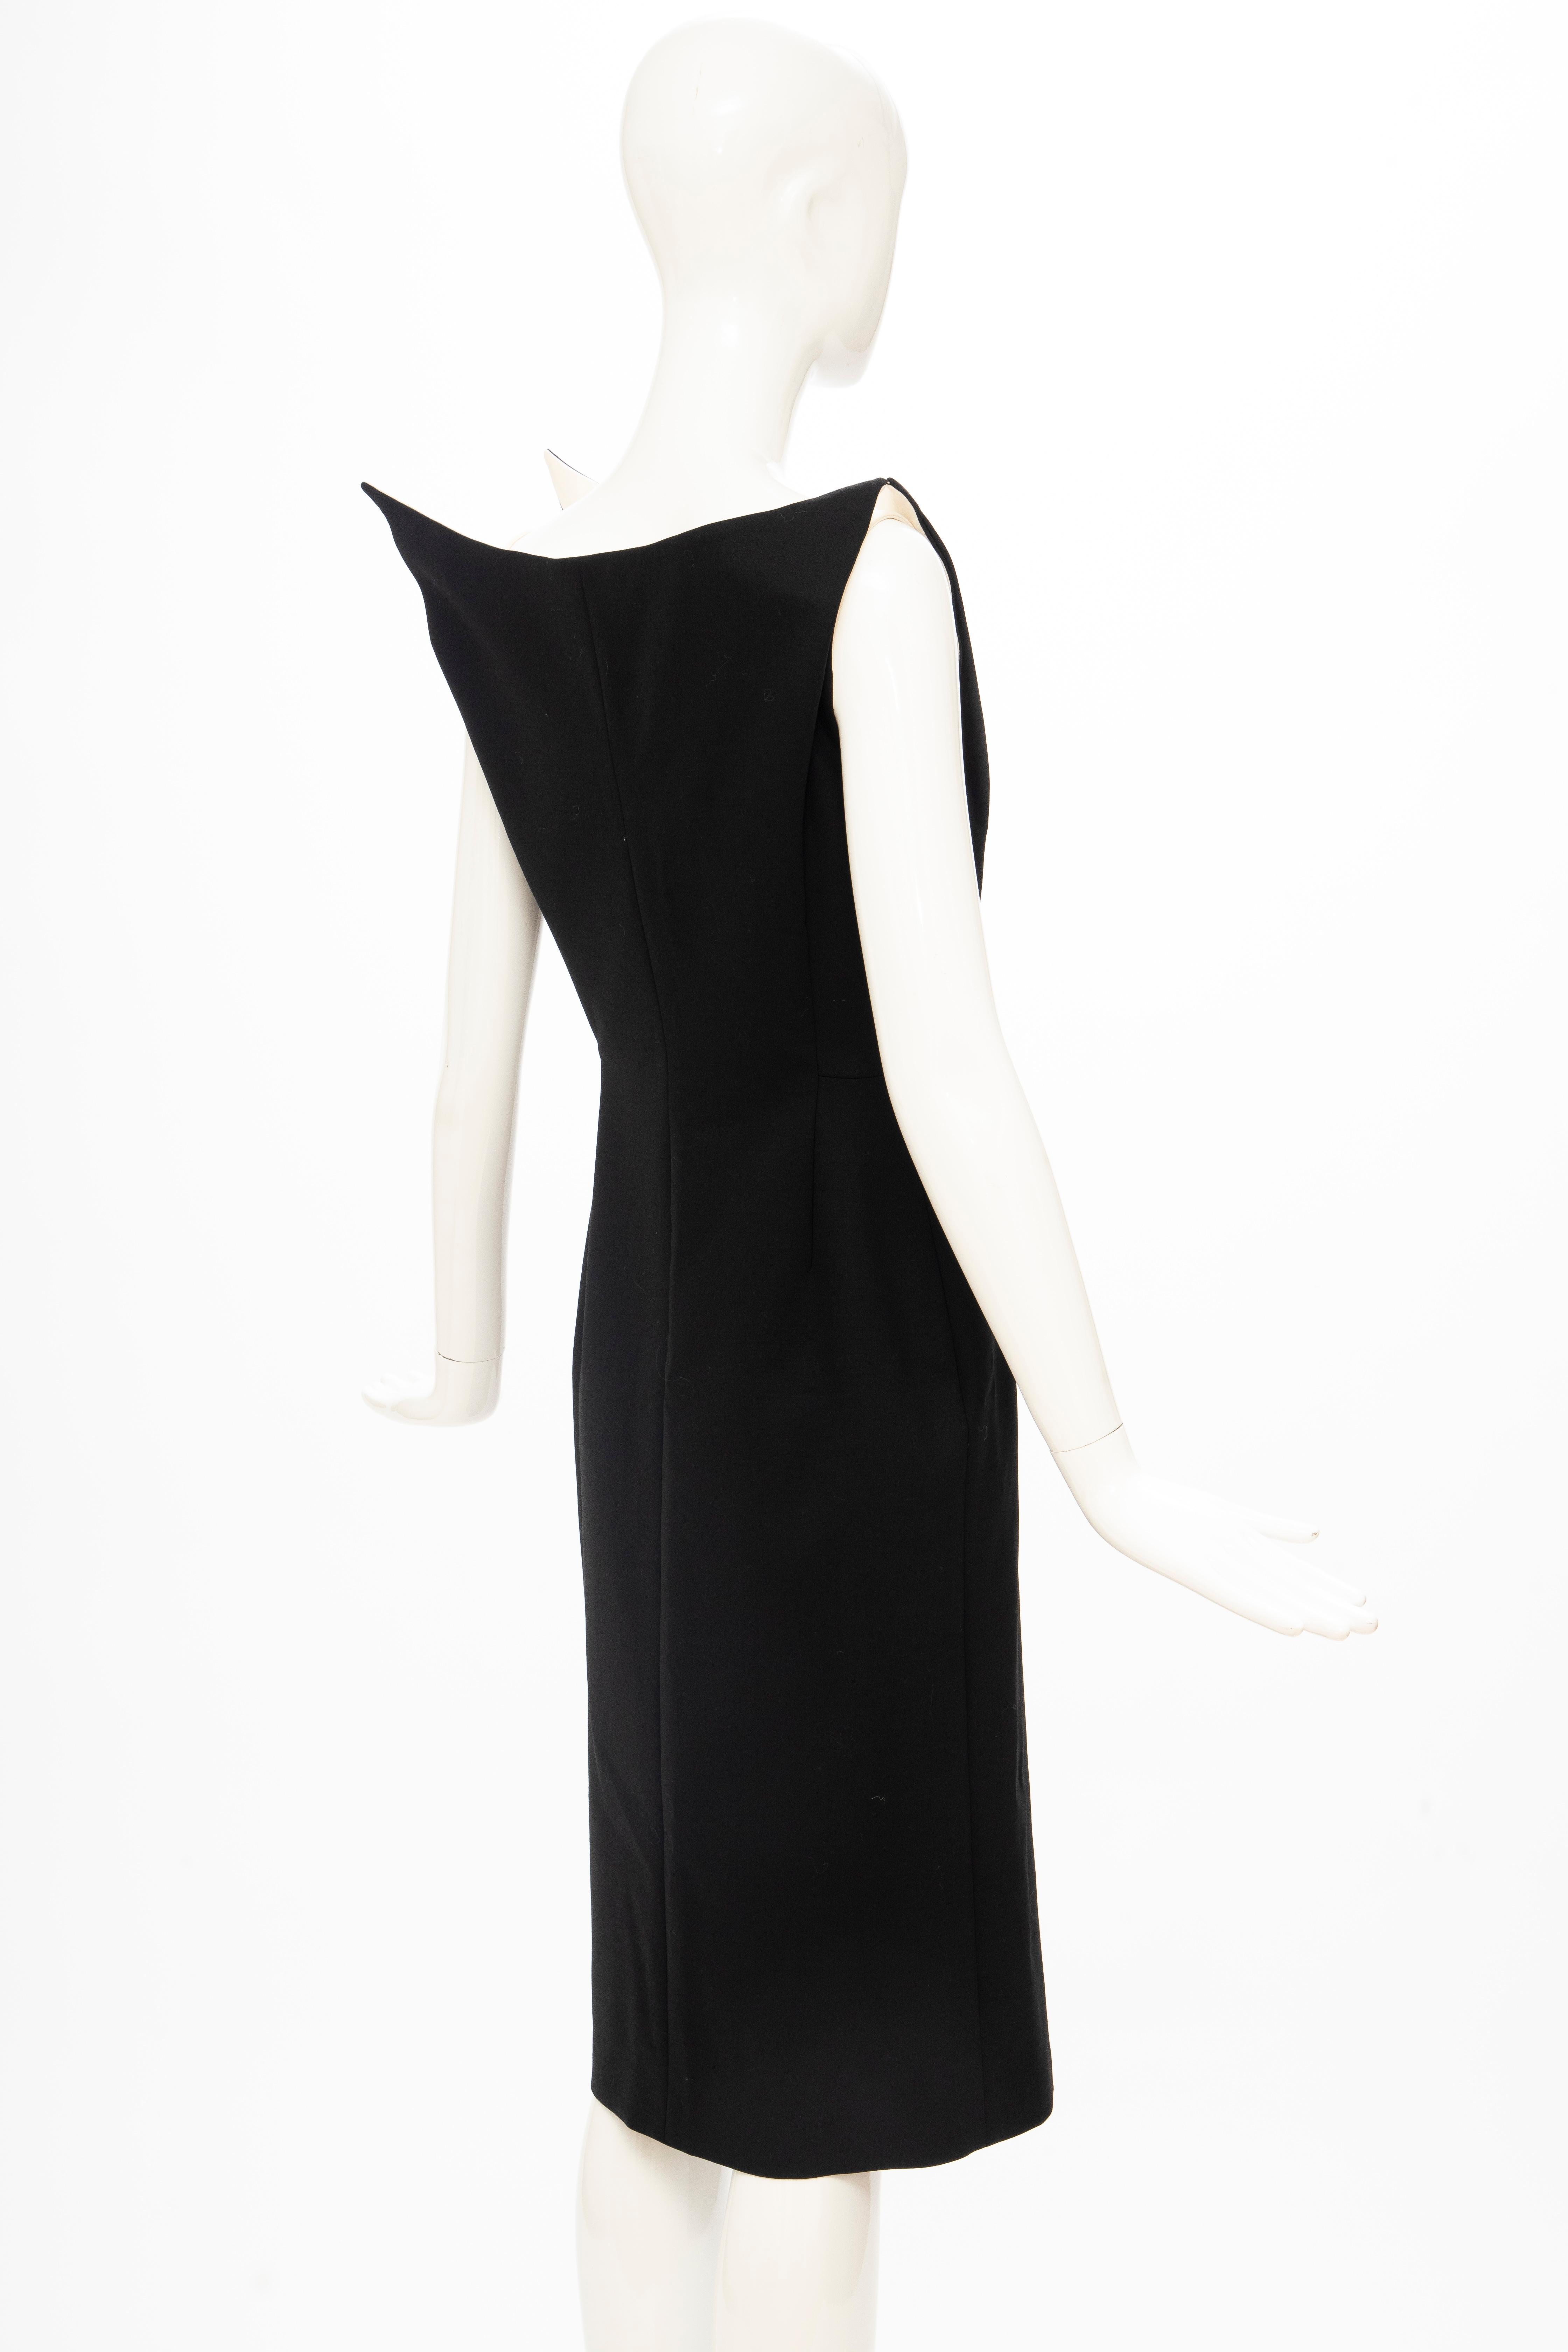 Raf Simons for Jil Sander Runway Black Wool Sculptural Evening Dress, Fall 2009 For Sale 1